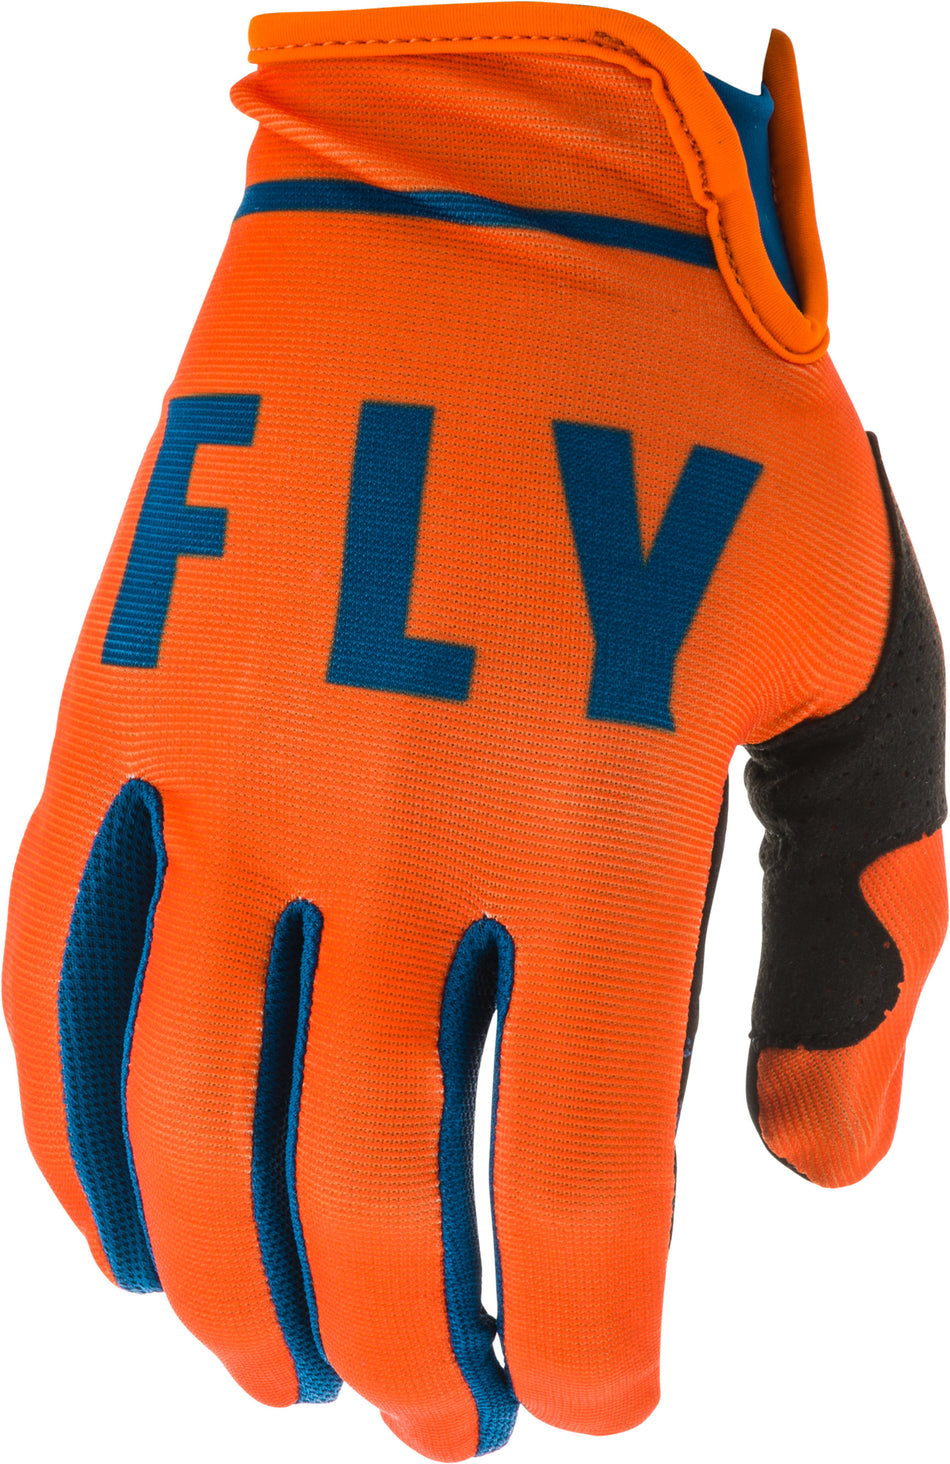 FLY RACING Lite Gloves Orange/Navy Sz 12 373-71312